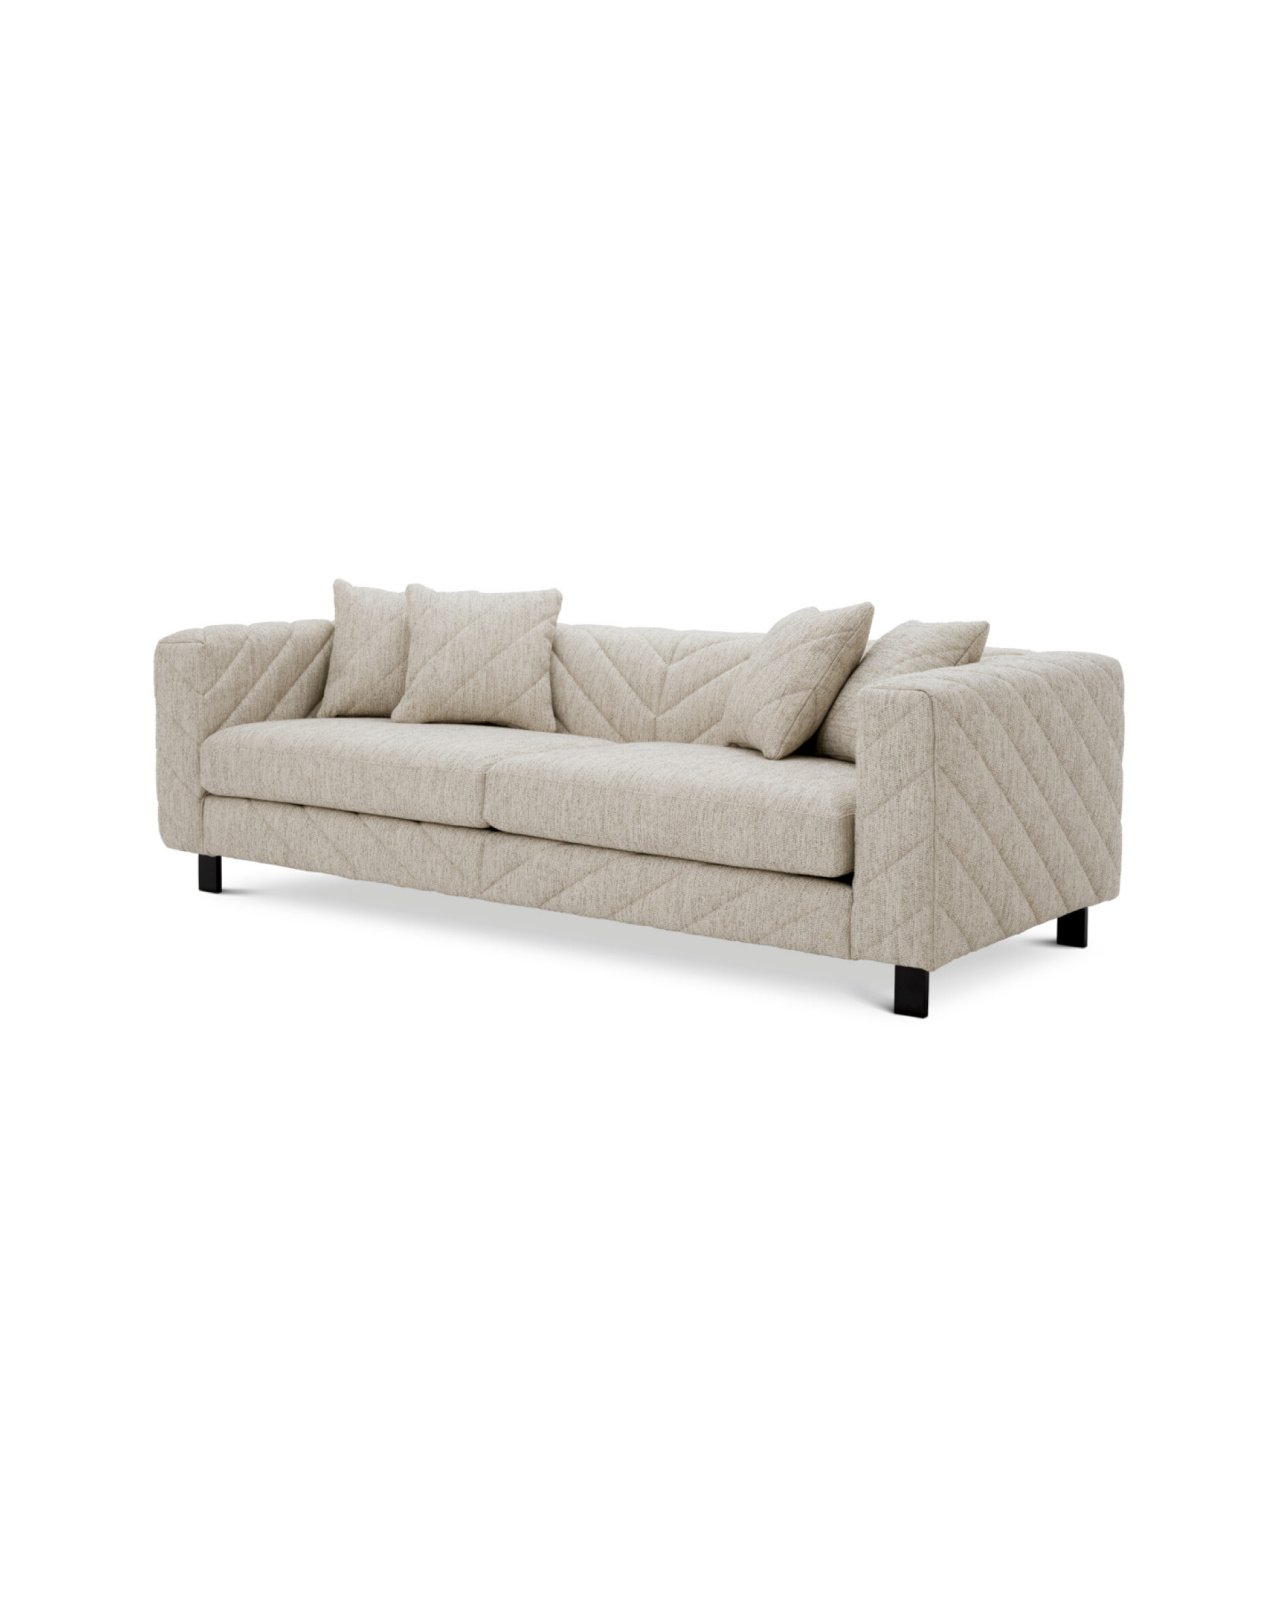 Avellino sofa splendor light grey